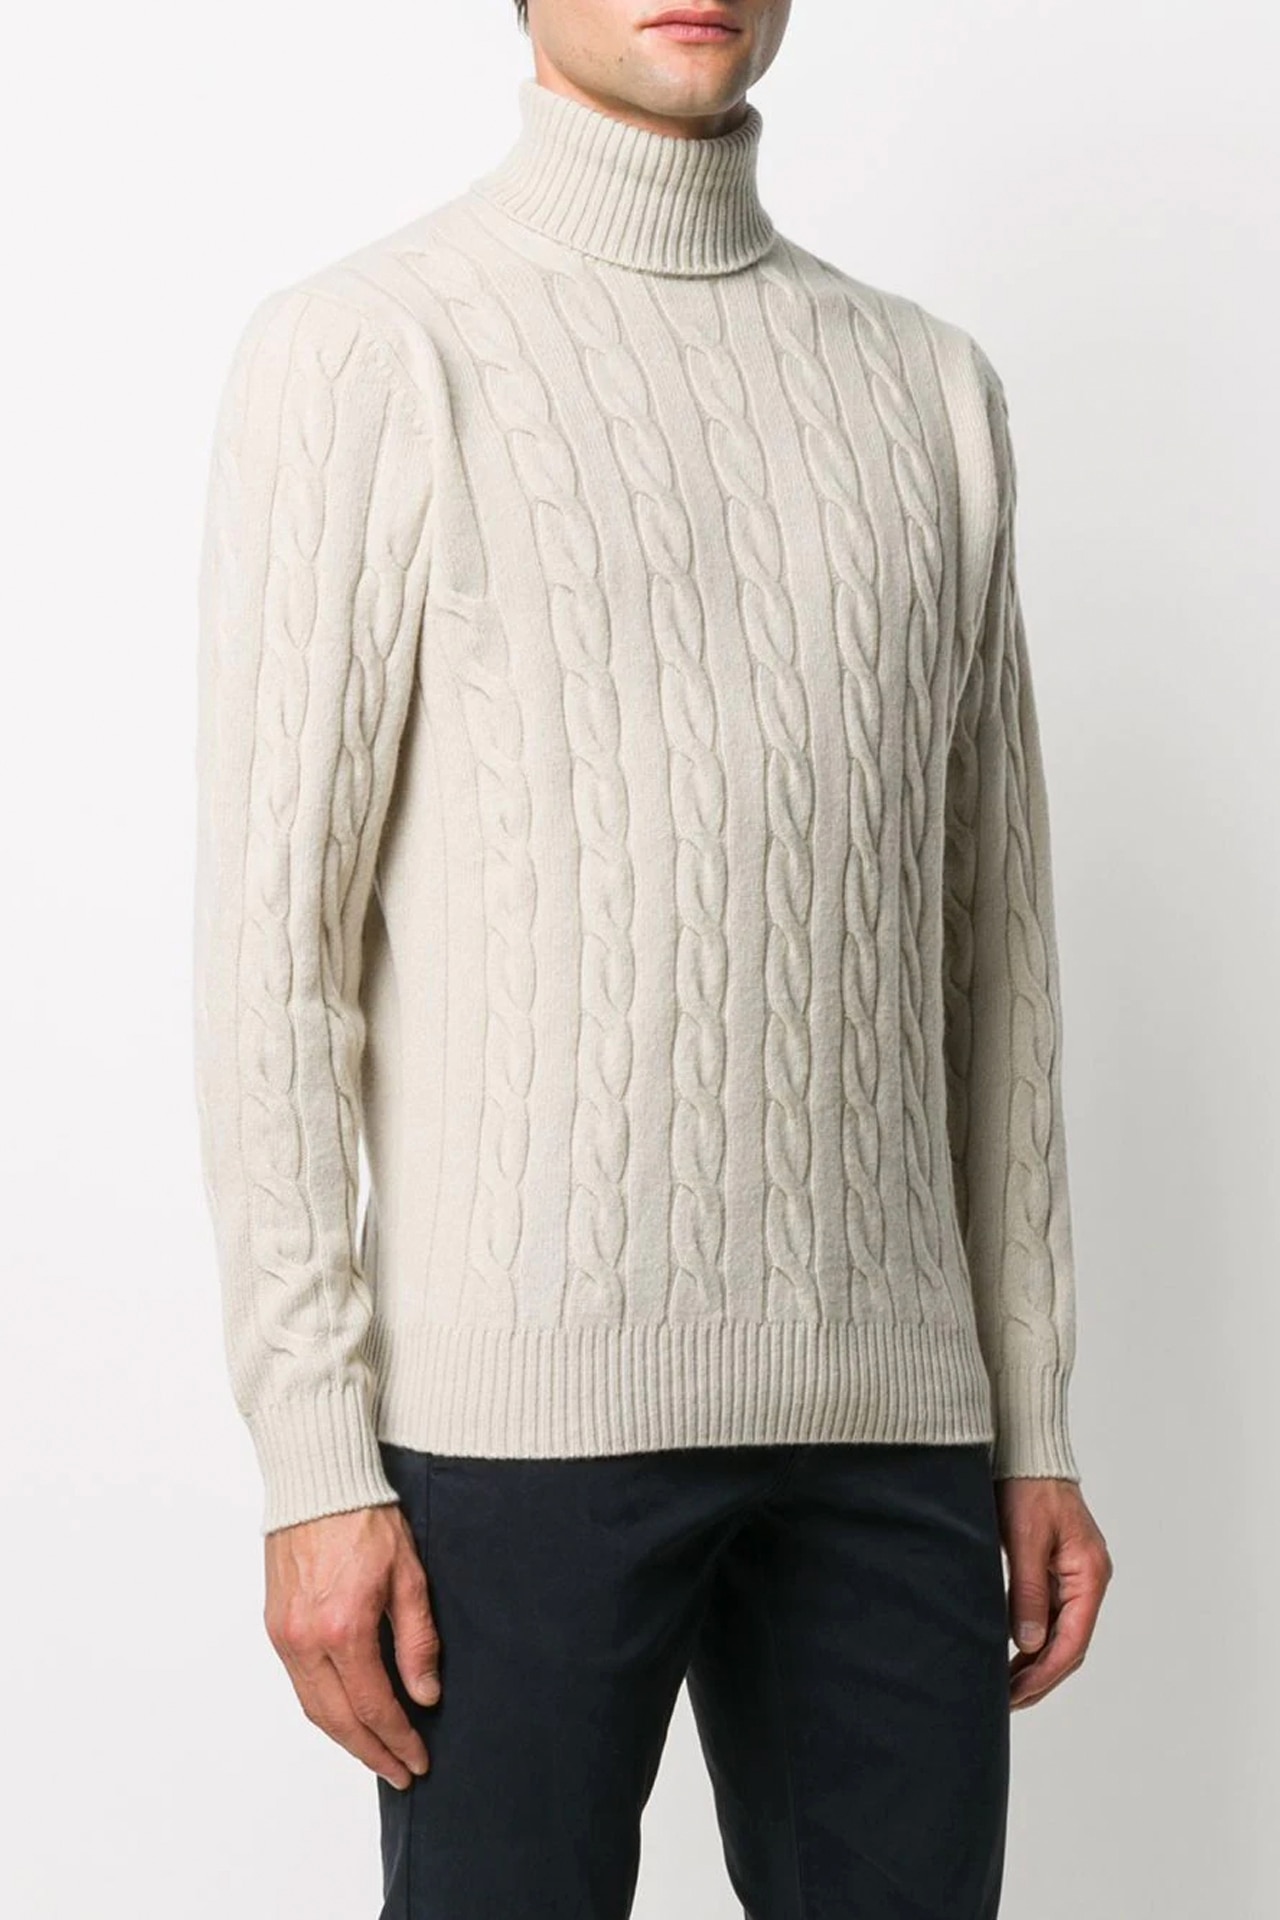 Adam Driver is behind this new knitwear trend - GQ Australia